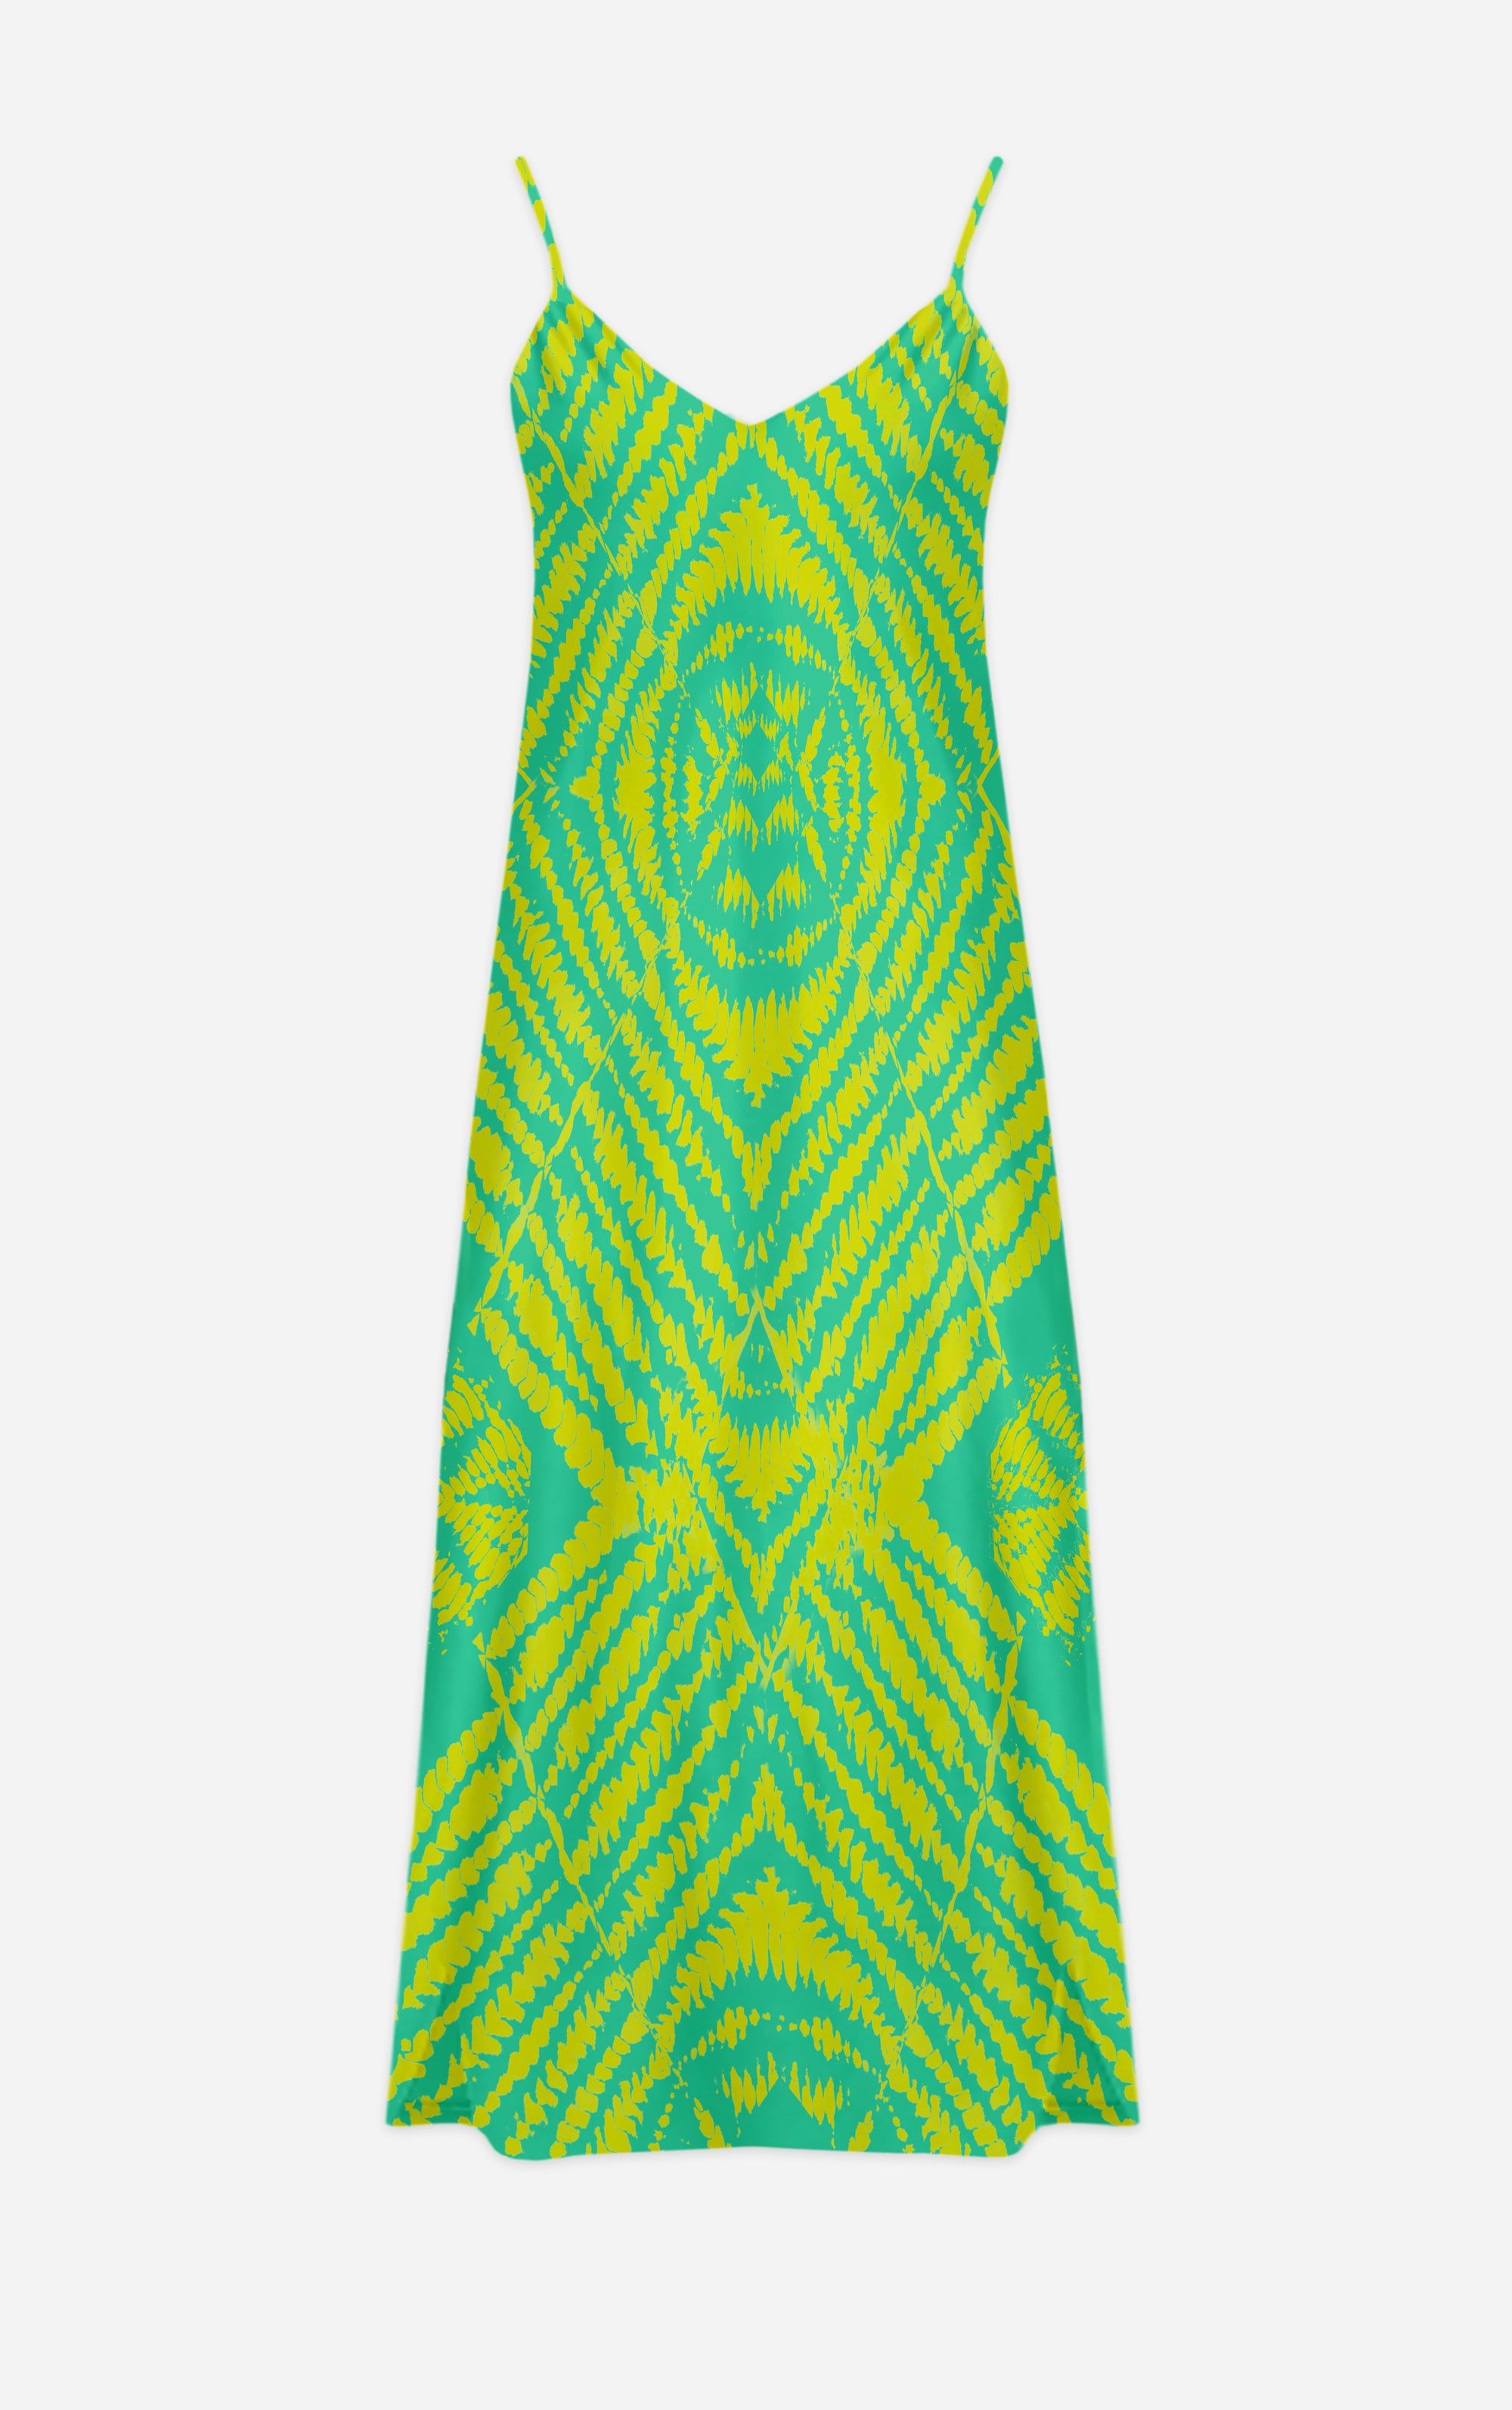 Byzantine V Neck-Tie Dye Slip Dress-Bold Jade Teal & Mustard-Surreal Fashion- Le Leanian- The Photographist